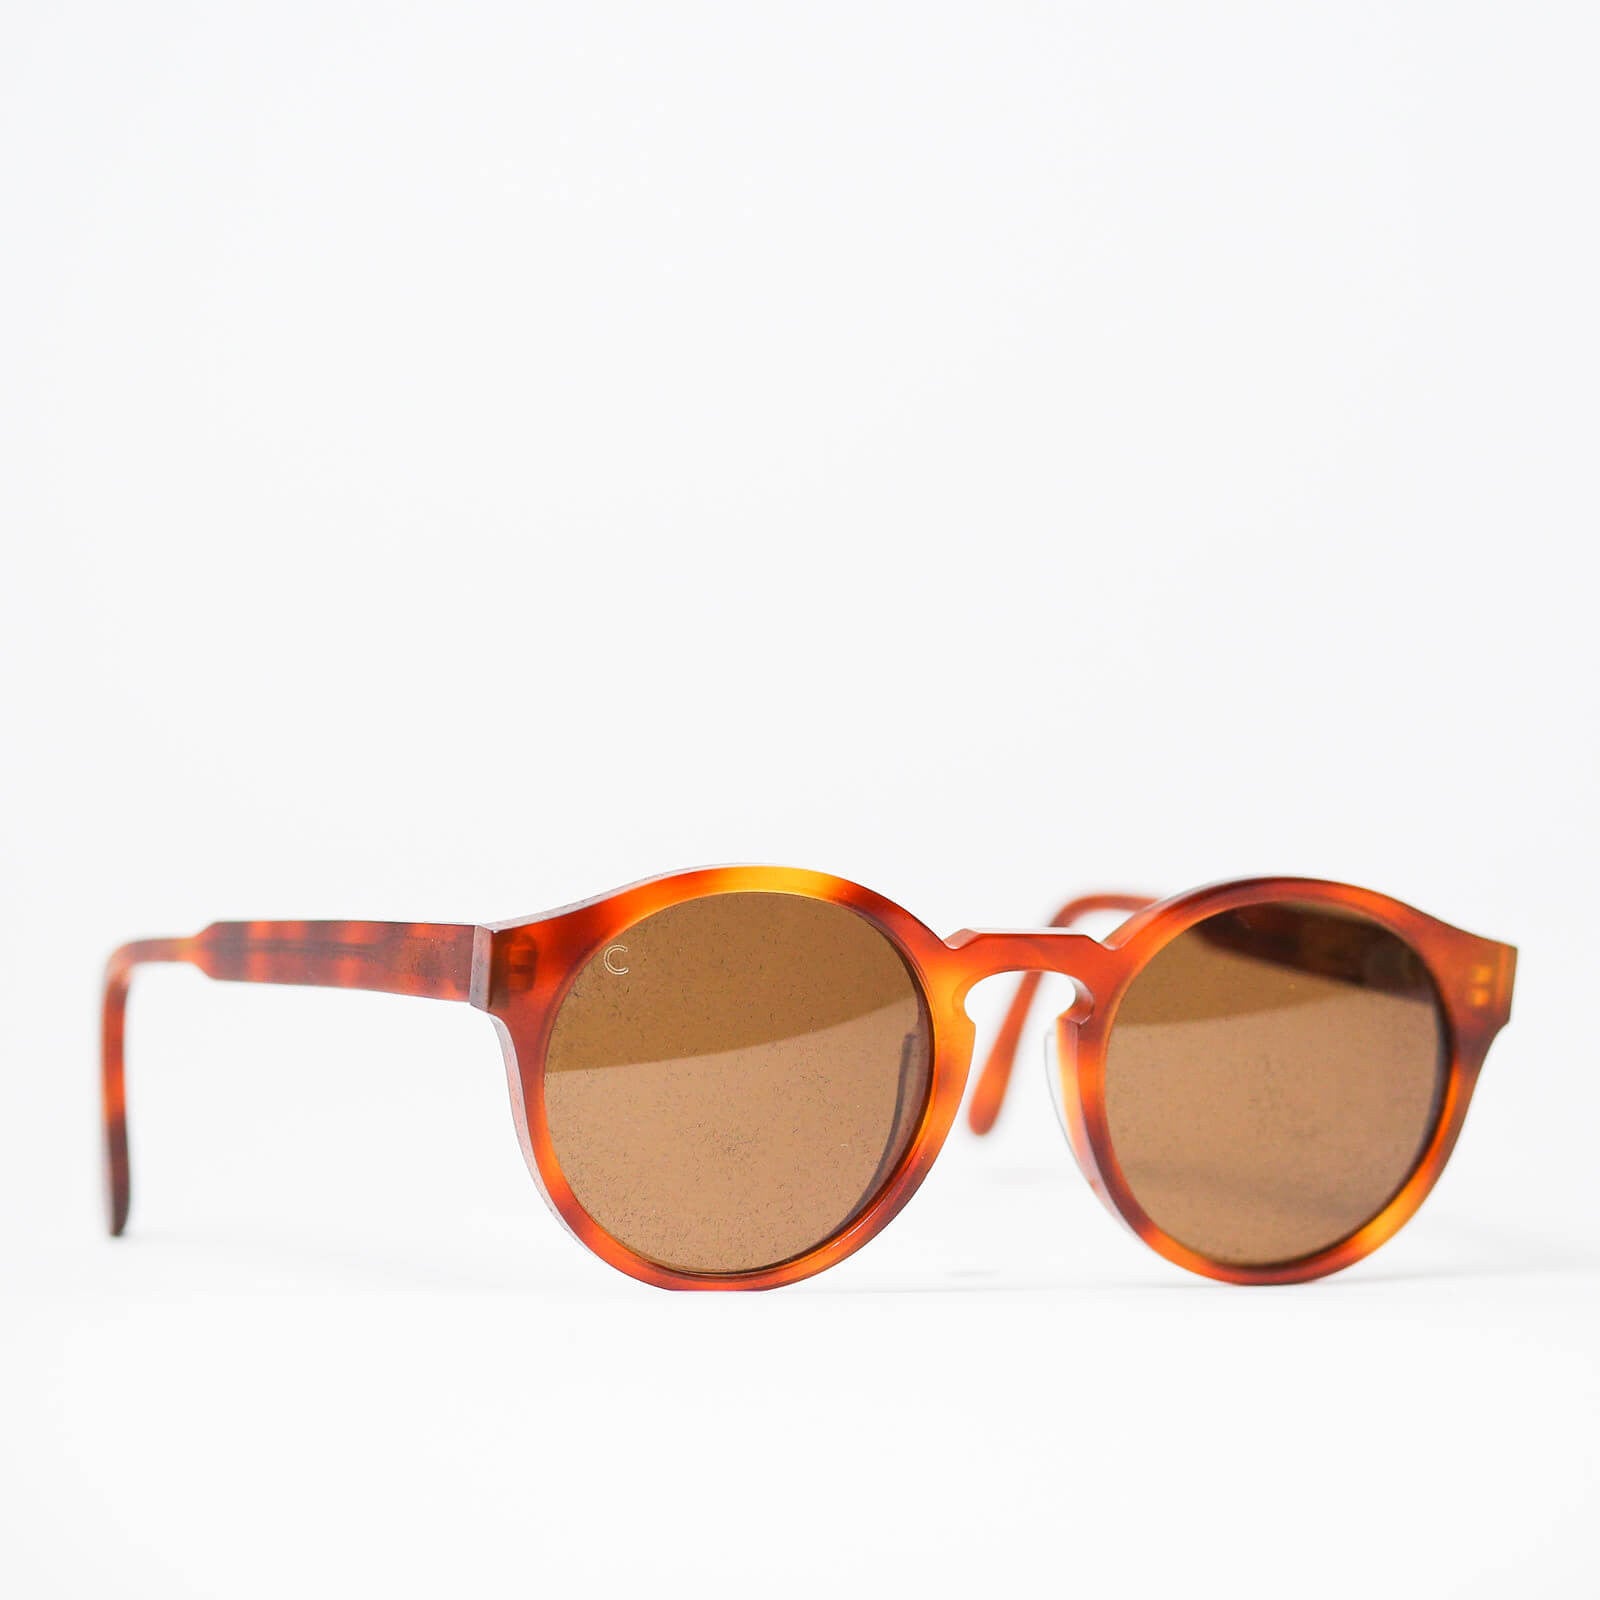 Morgan Sunglasses - Auburn Tortoise